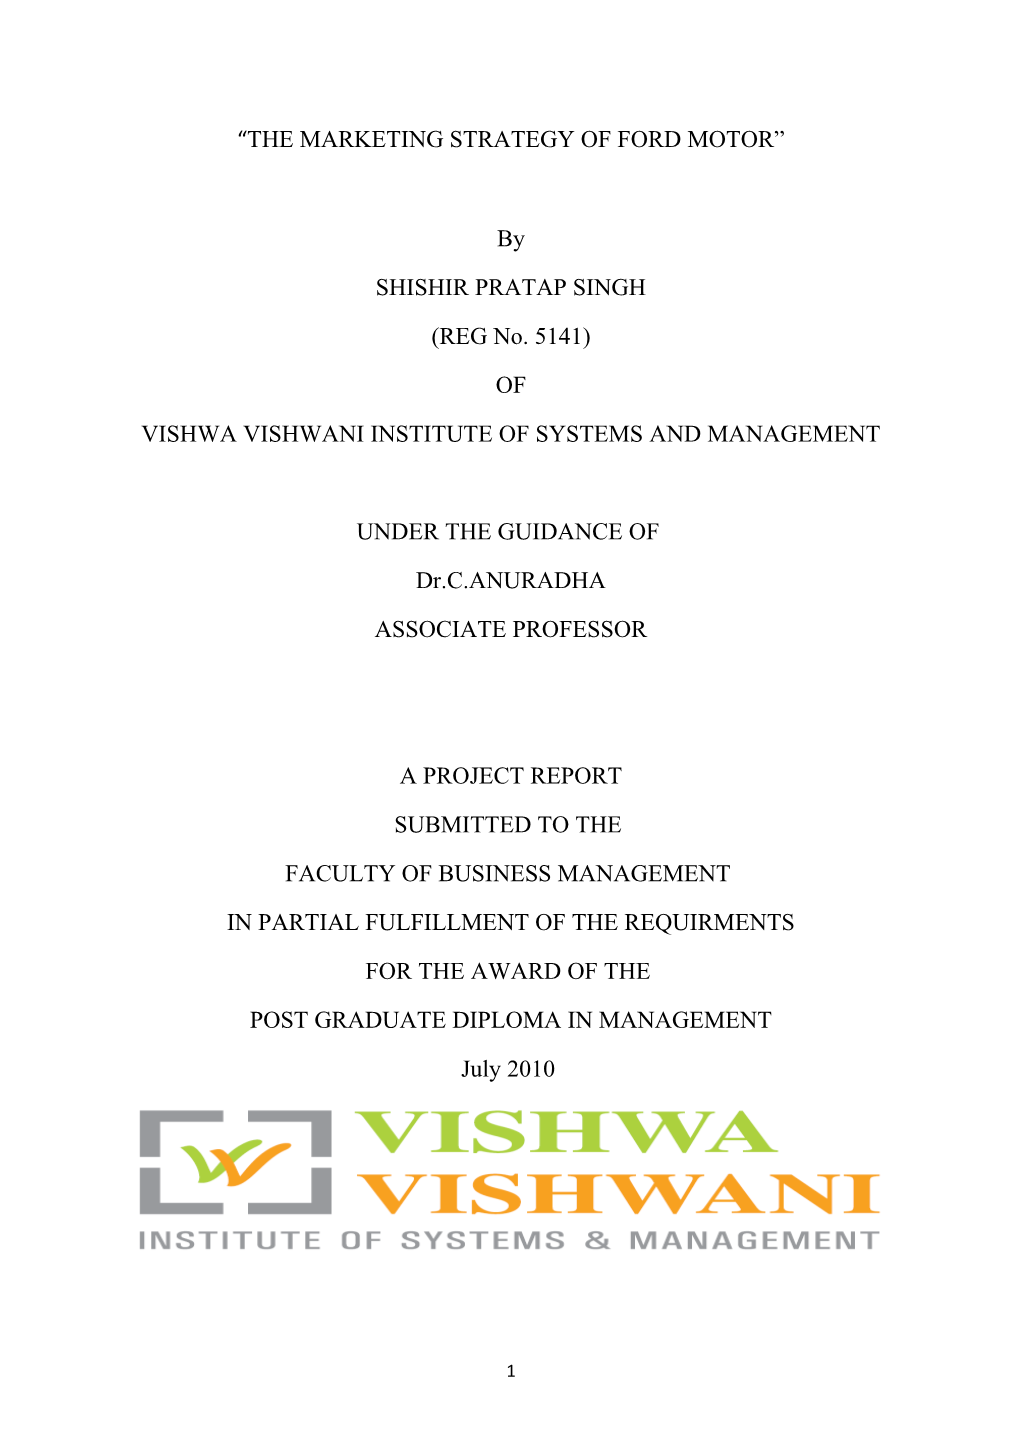 Vishwa Vishwani Institute of Systems and Management